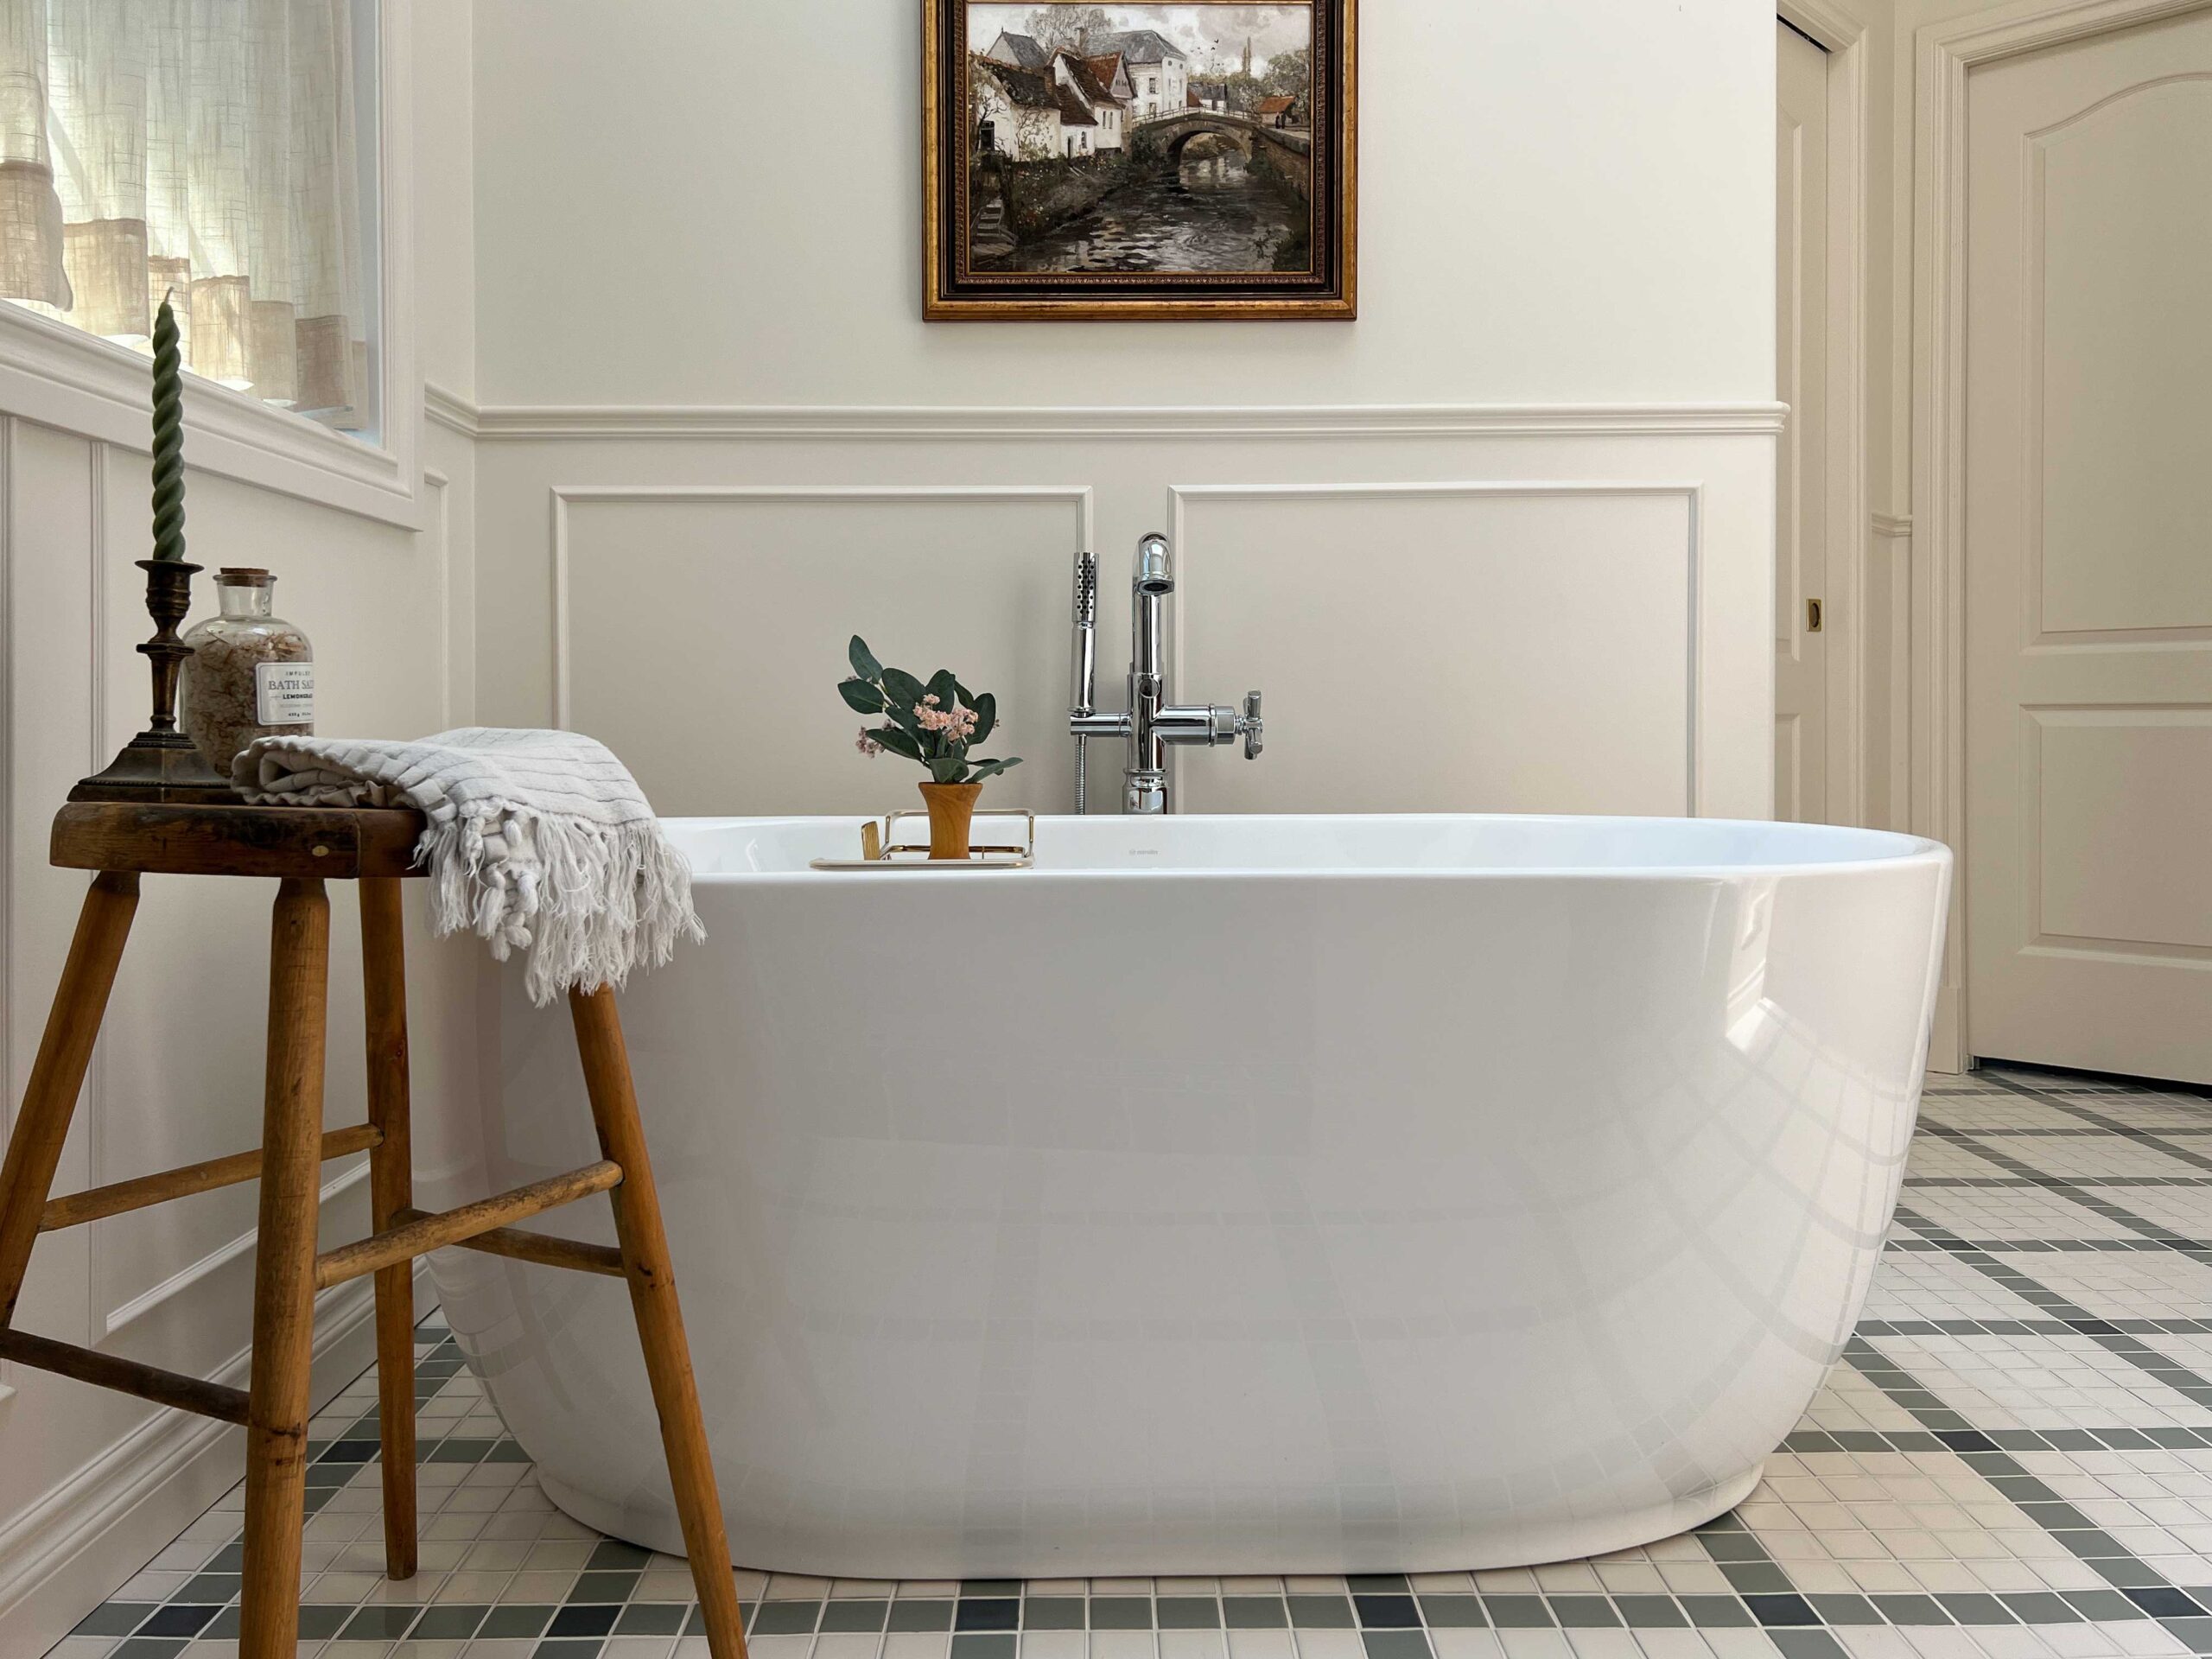 freestanding bathtub with antique wooden stool, checkerboard floor, beige walls